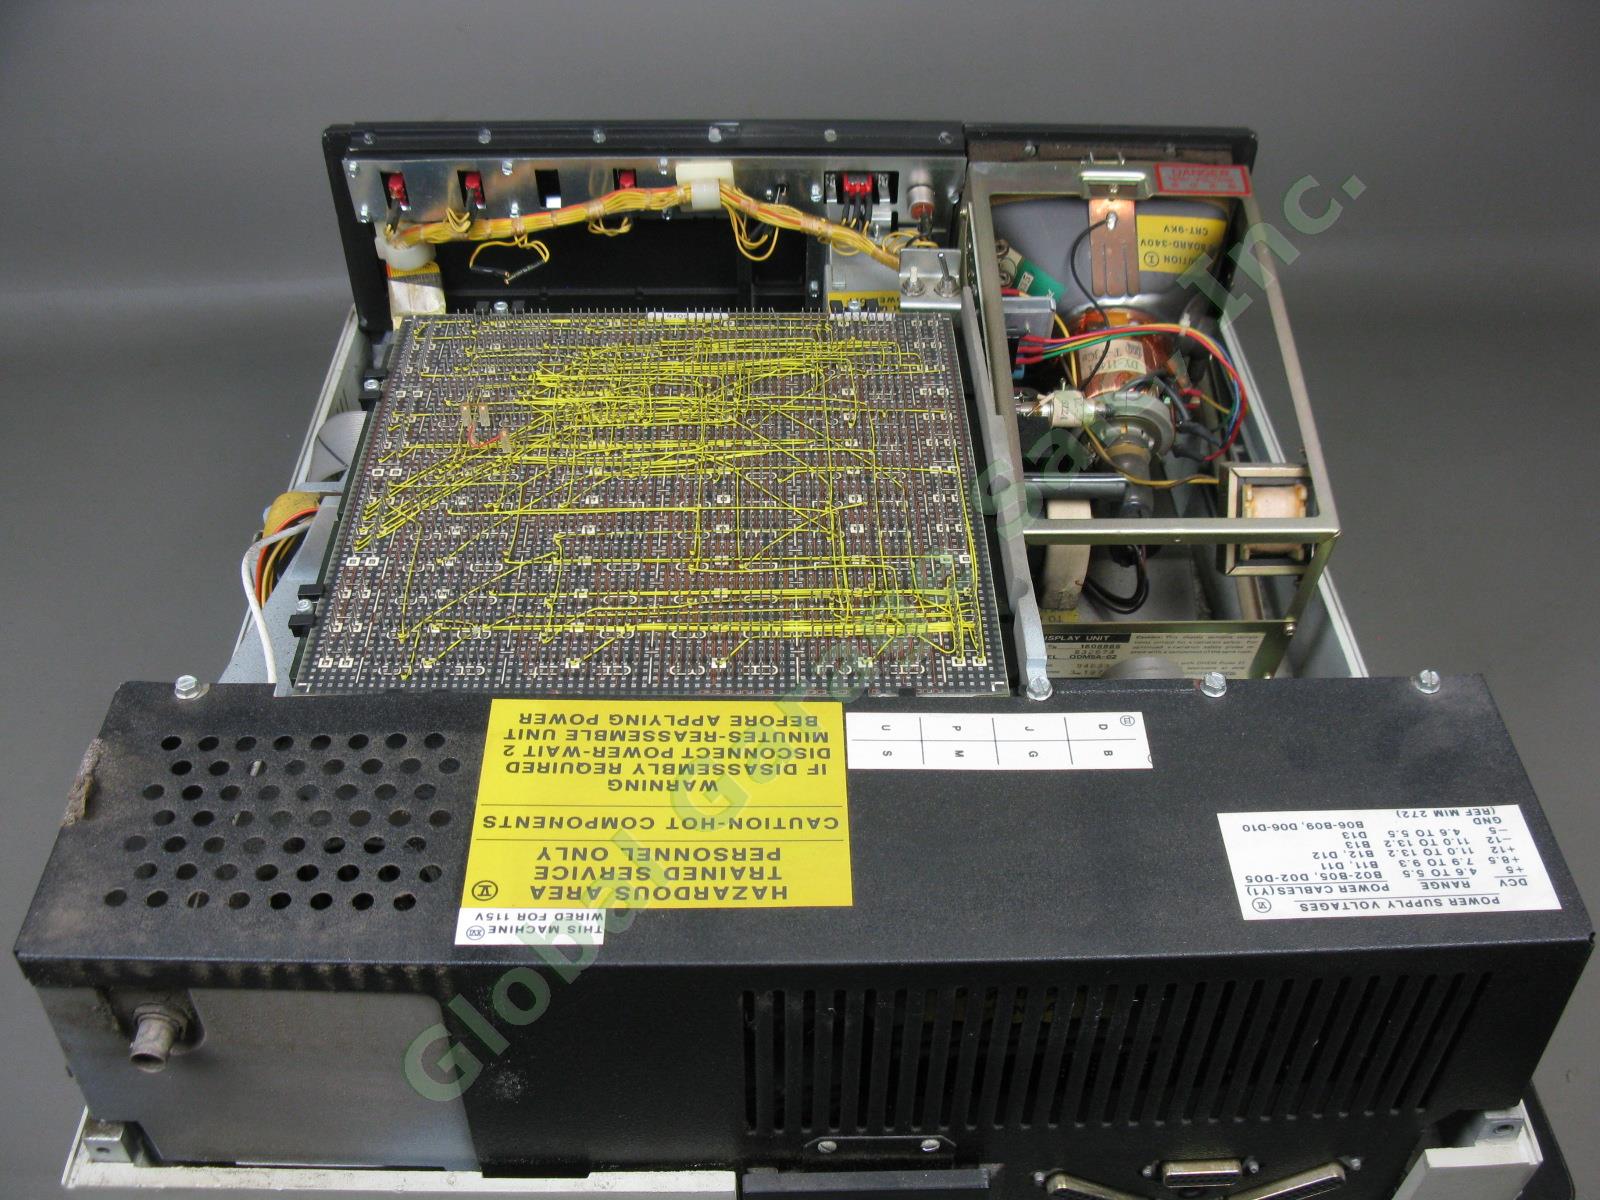 Vtg 1979 IBM 5110 Computing System Portable PC Computer 1.9MHz 16K-64K RAM BASIC 13